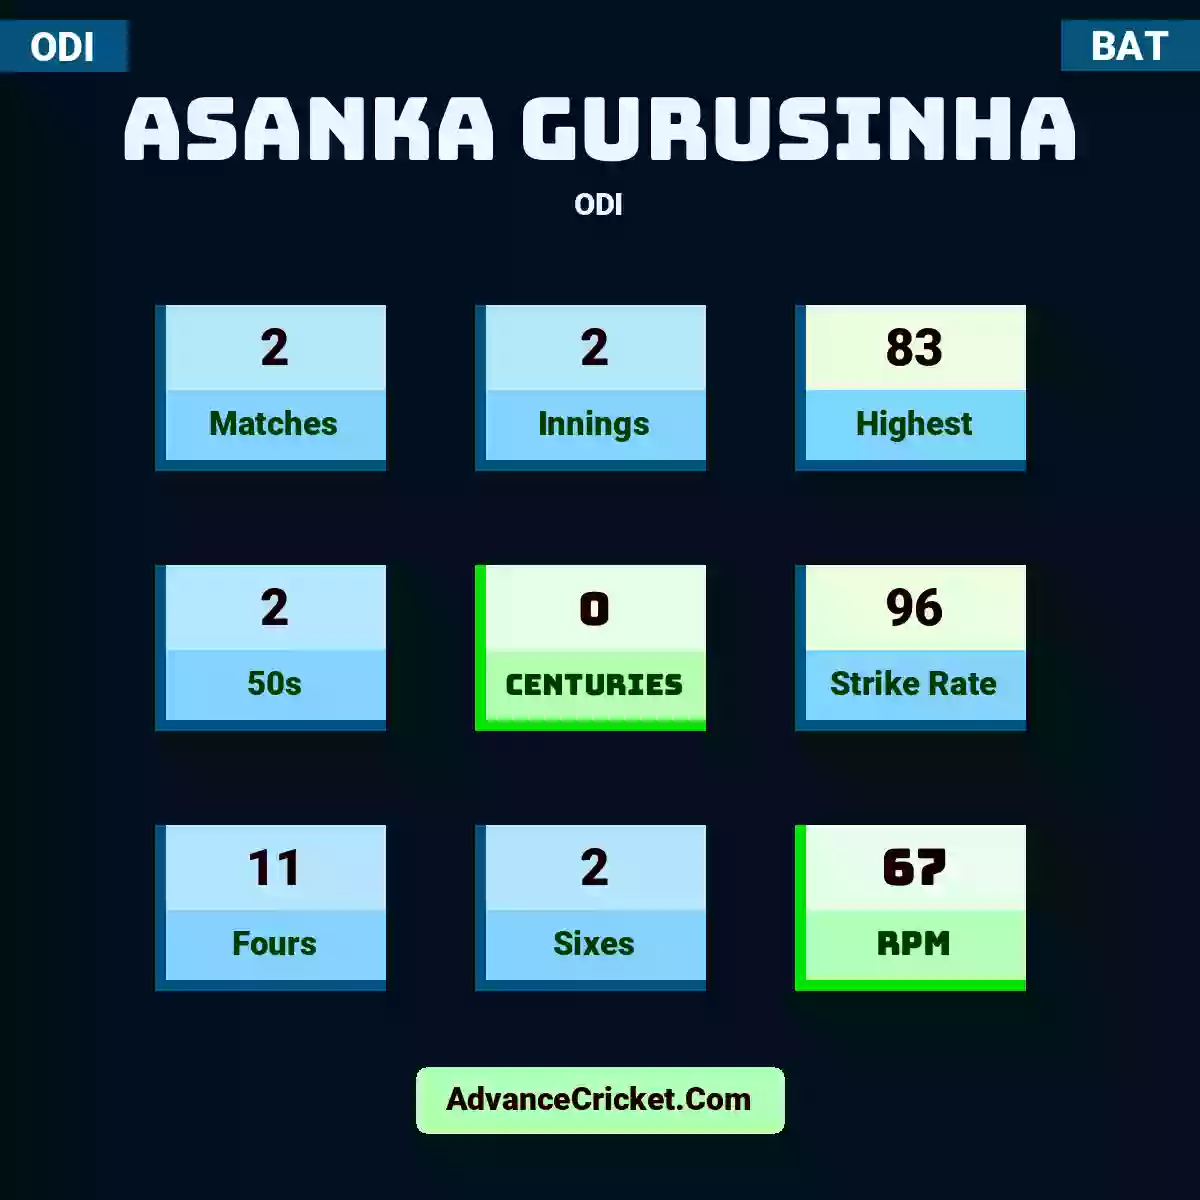 Asanka Gurusinha ODI , Asanka Gurusinha played 2 matches, scored 83 runs as highest, 2 half-centuries, and 0 centuries, with a strike rate of 96. A.Gurusinha hit 11 fours and 2 sixes, with an RPM of 67.